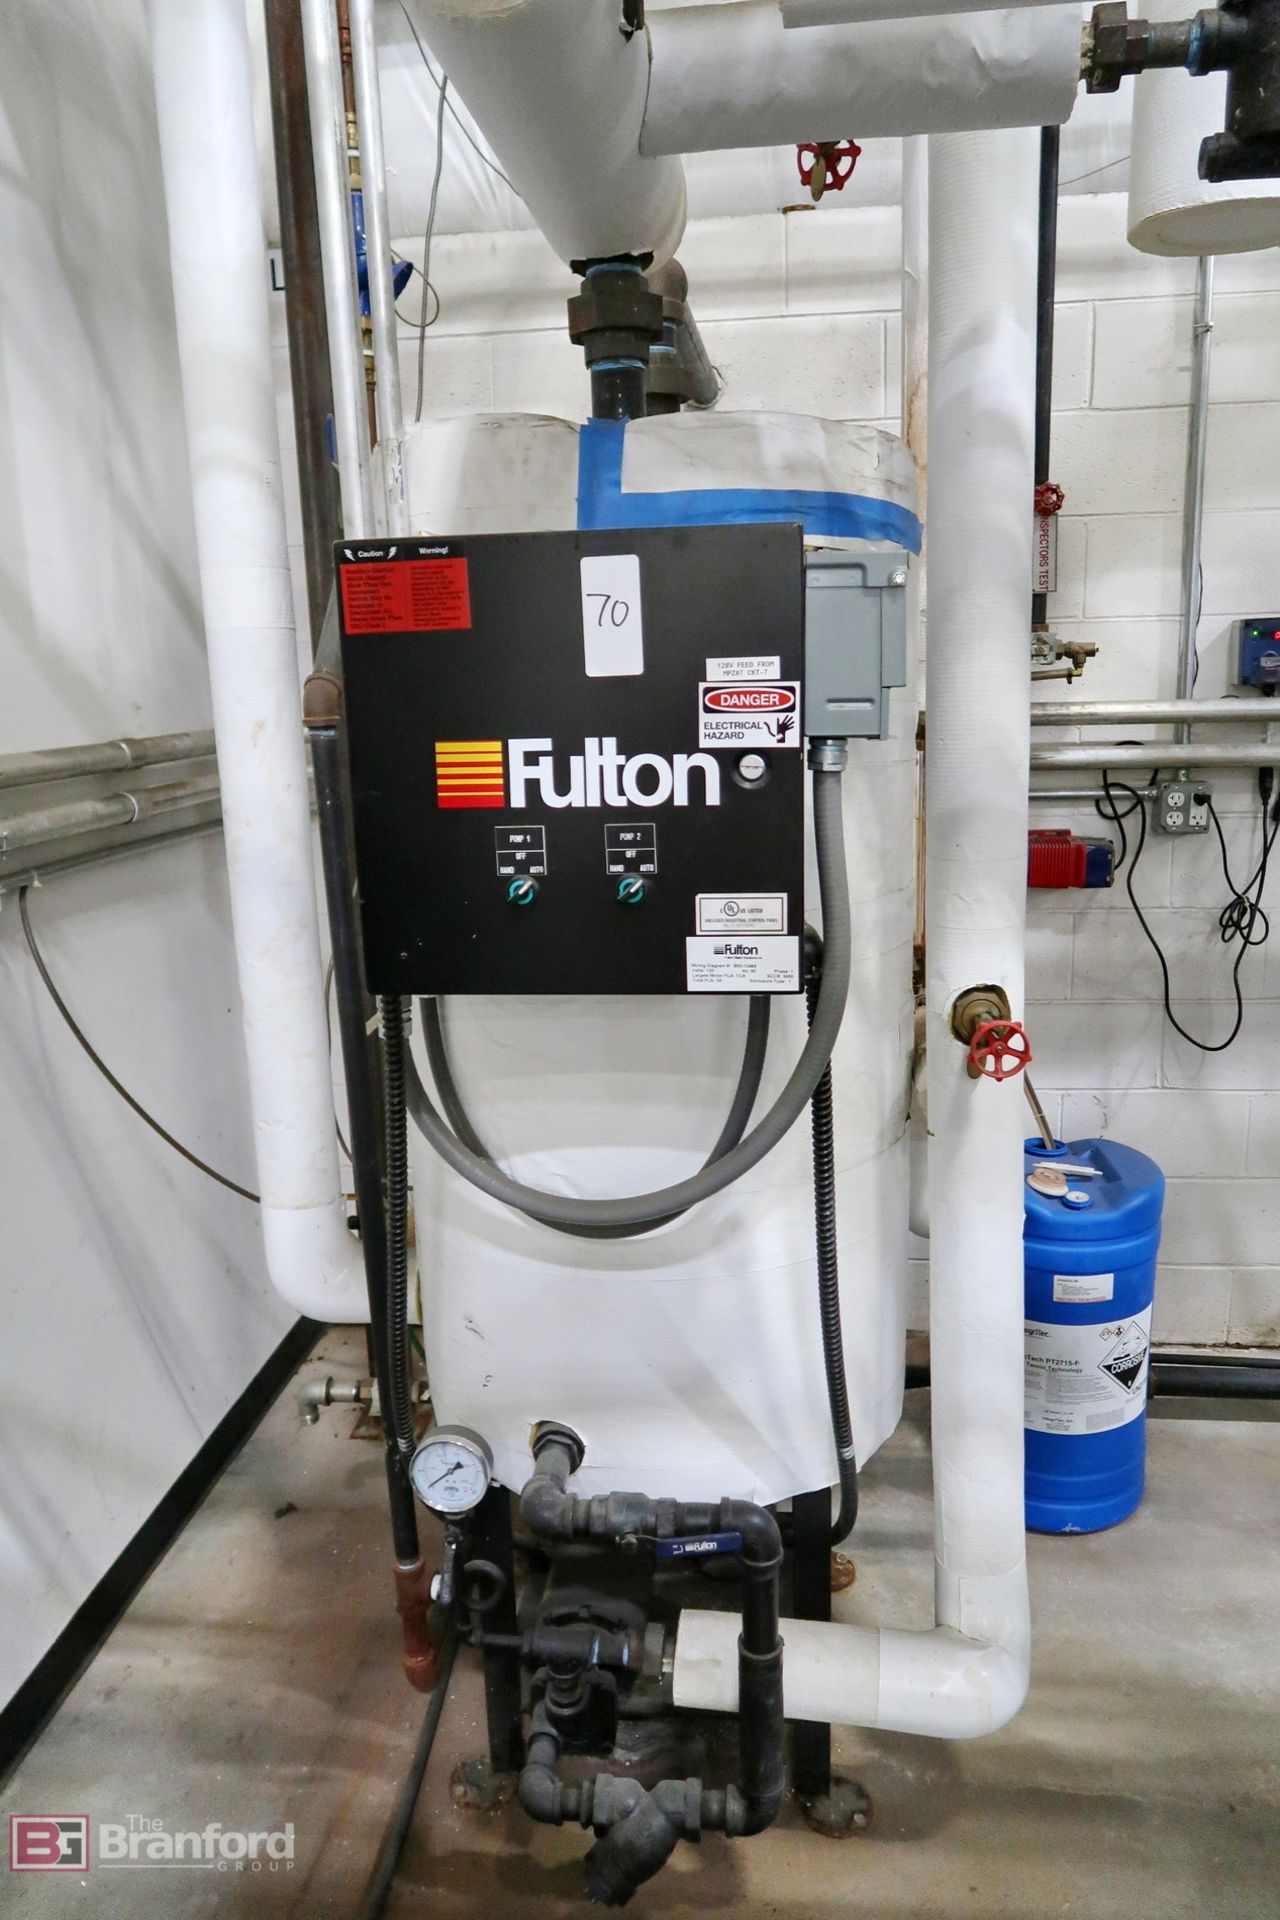 Fulton boiler system - Image 11 of 14